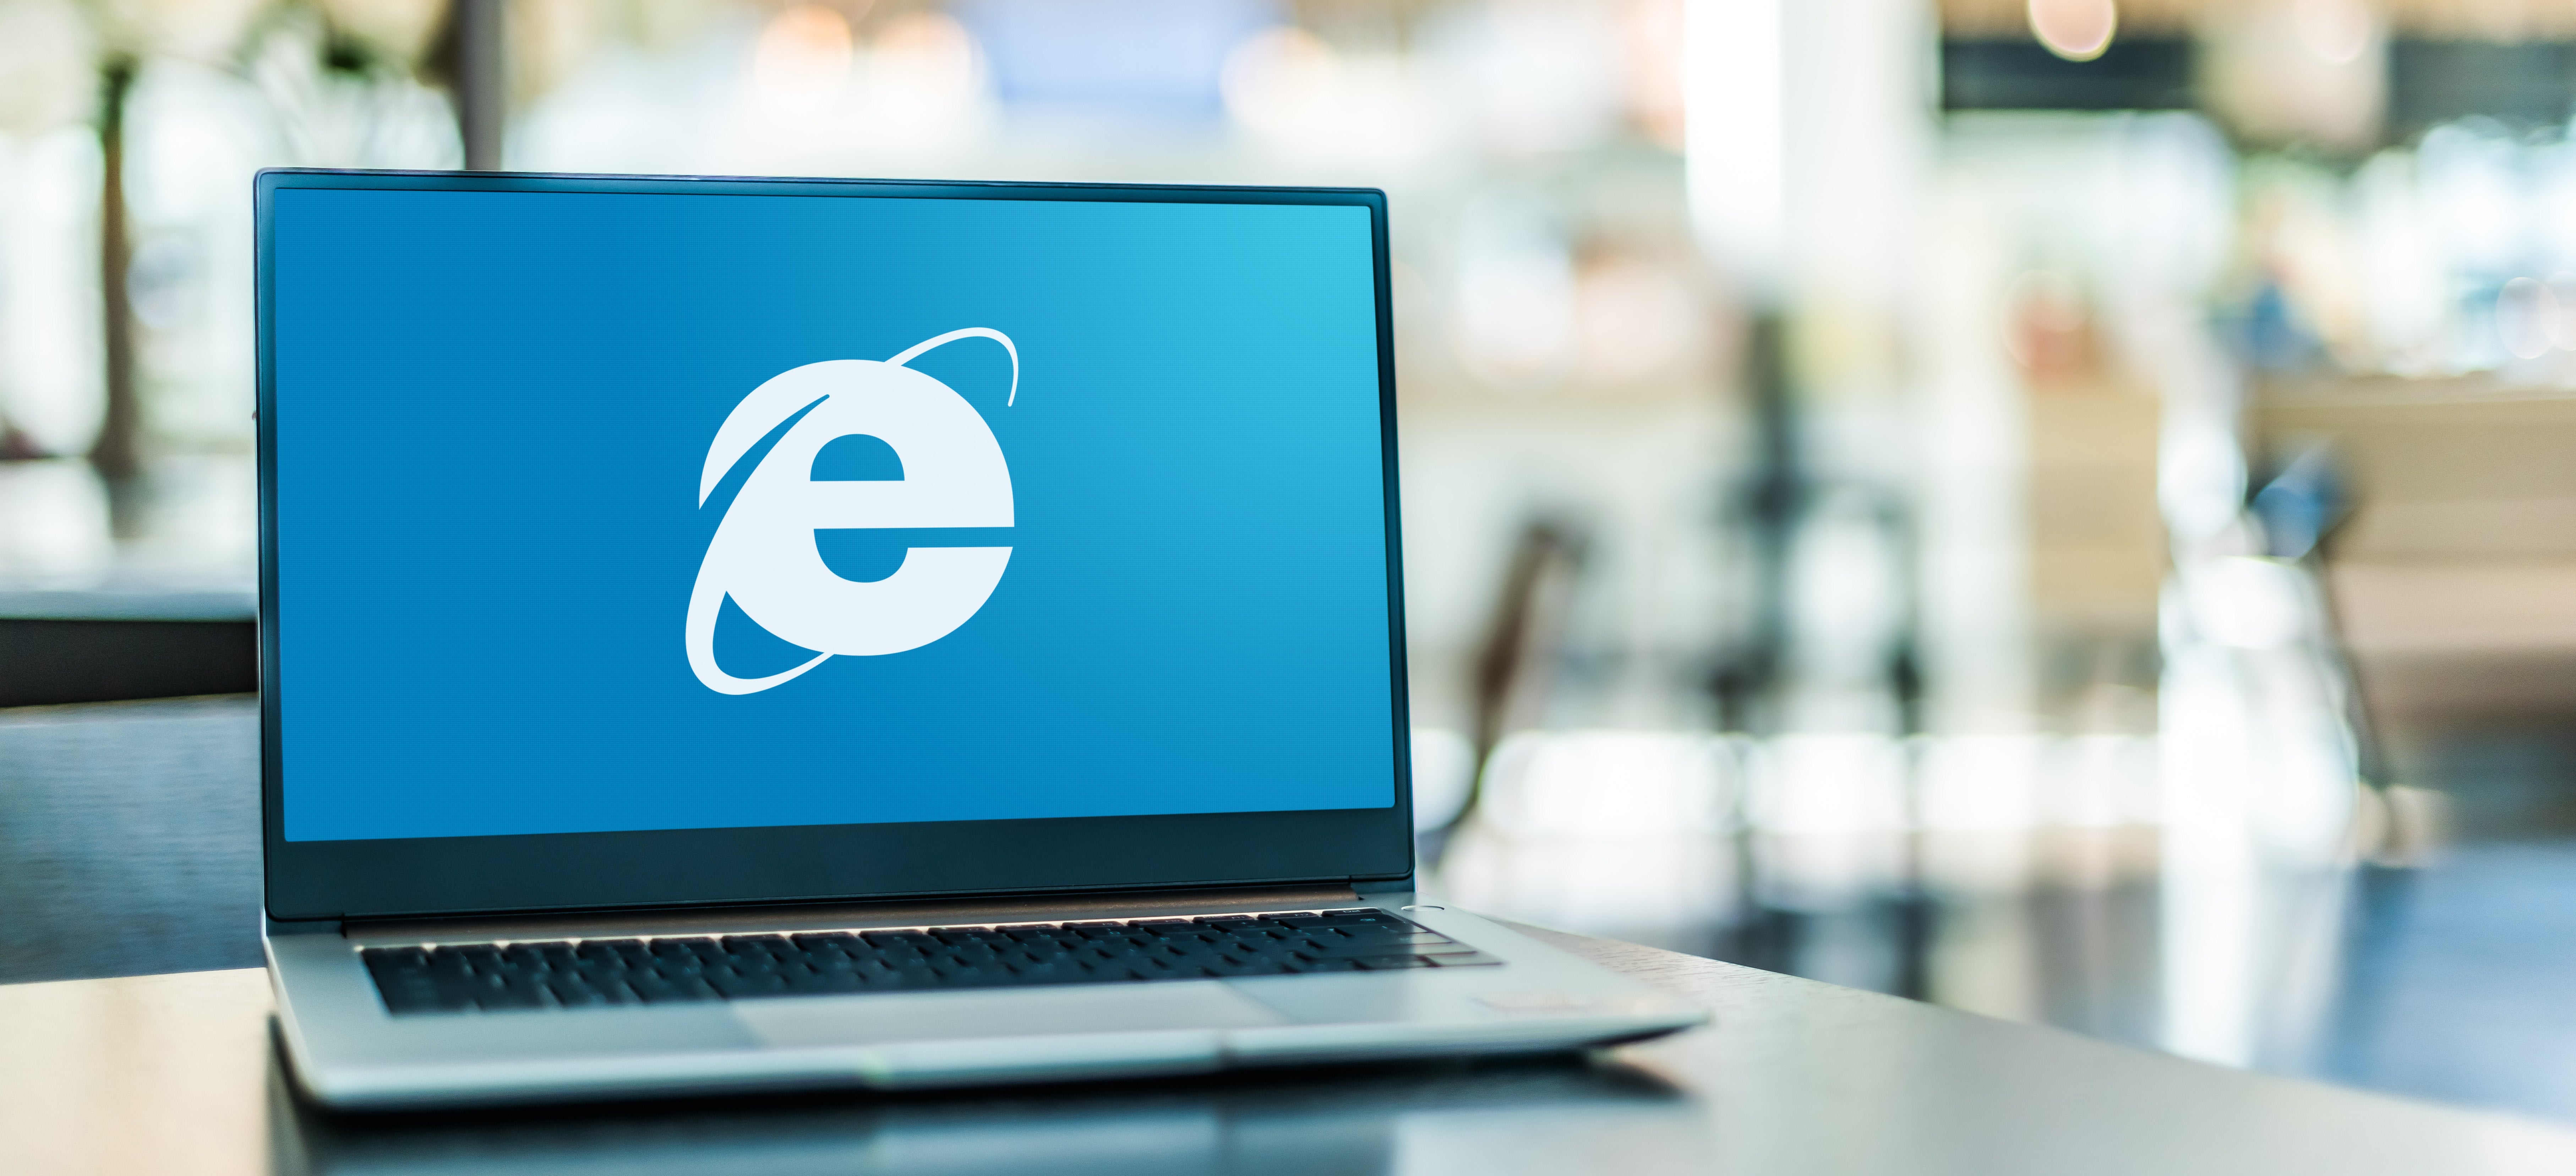 Internet Explorer (Photo: monticello, Shutterstock)